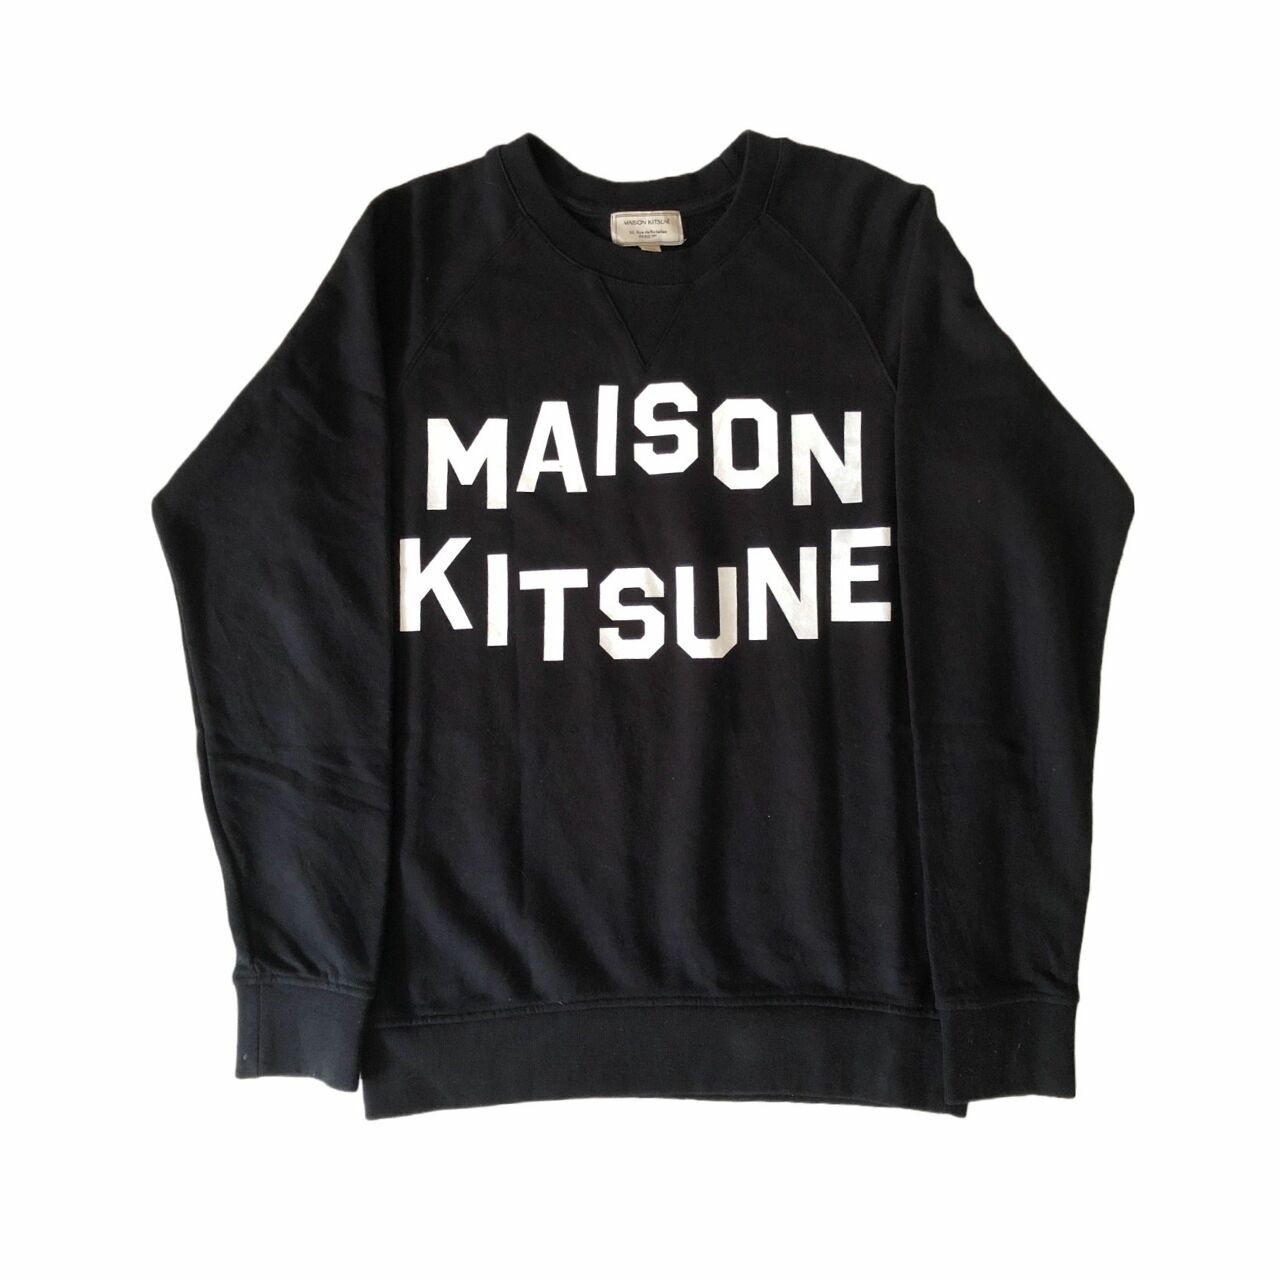 Maison Kitsune Black Sweater